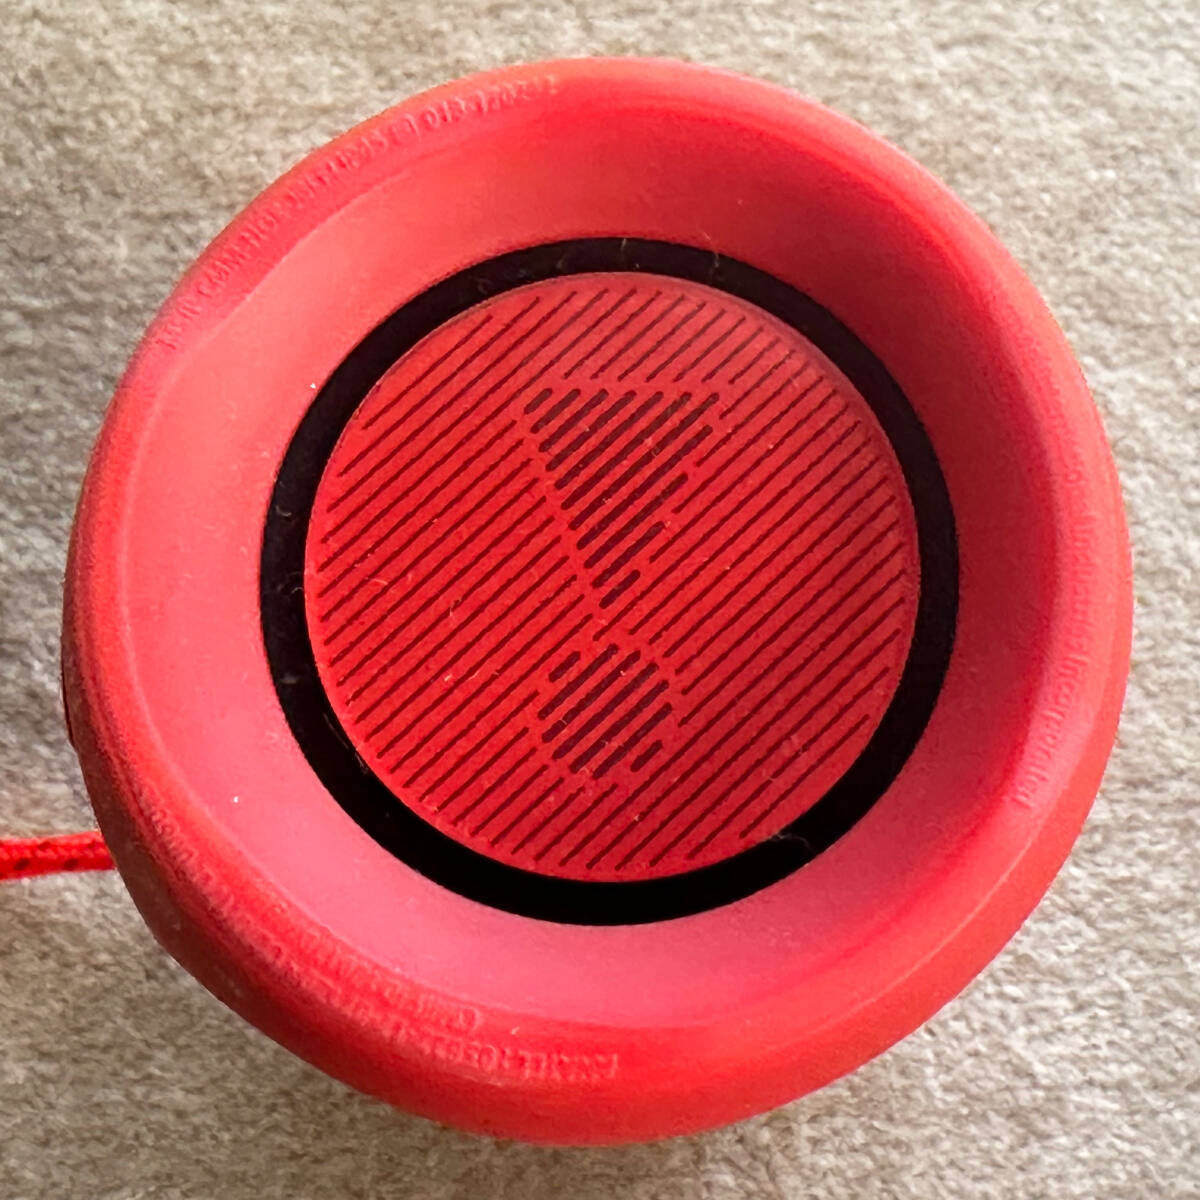 JBL スピーカー Bluetooth パッシブラジエーター FLIP 4 フリップ4 RED 赤 IPX7 防水 専用ケース付_画像8